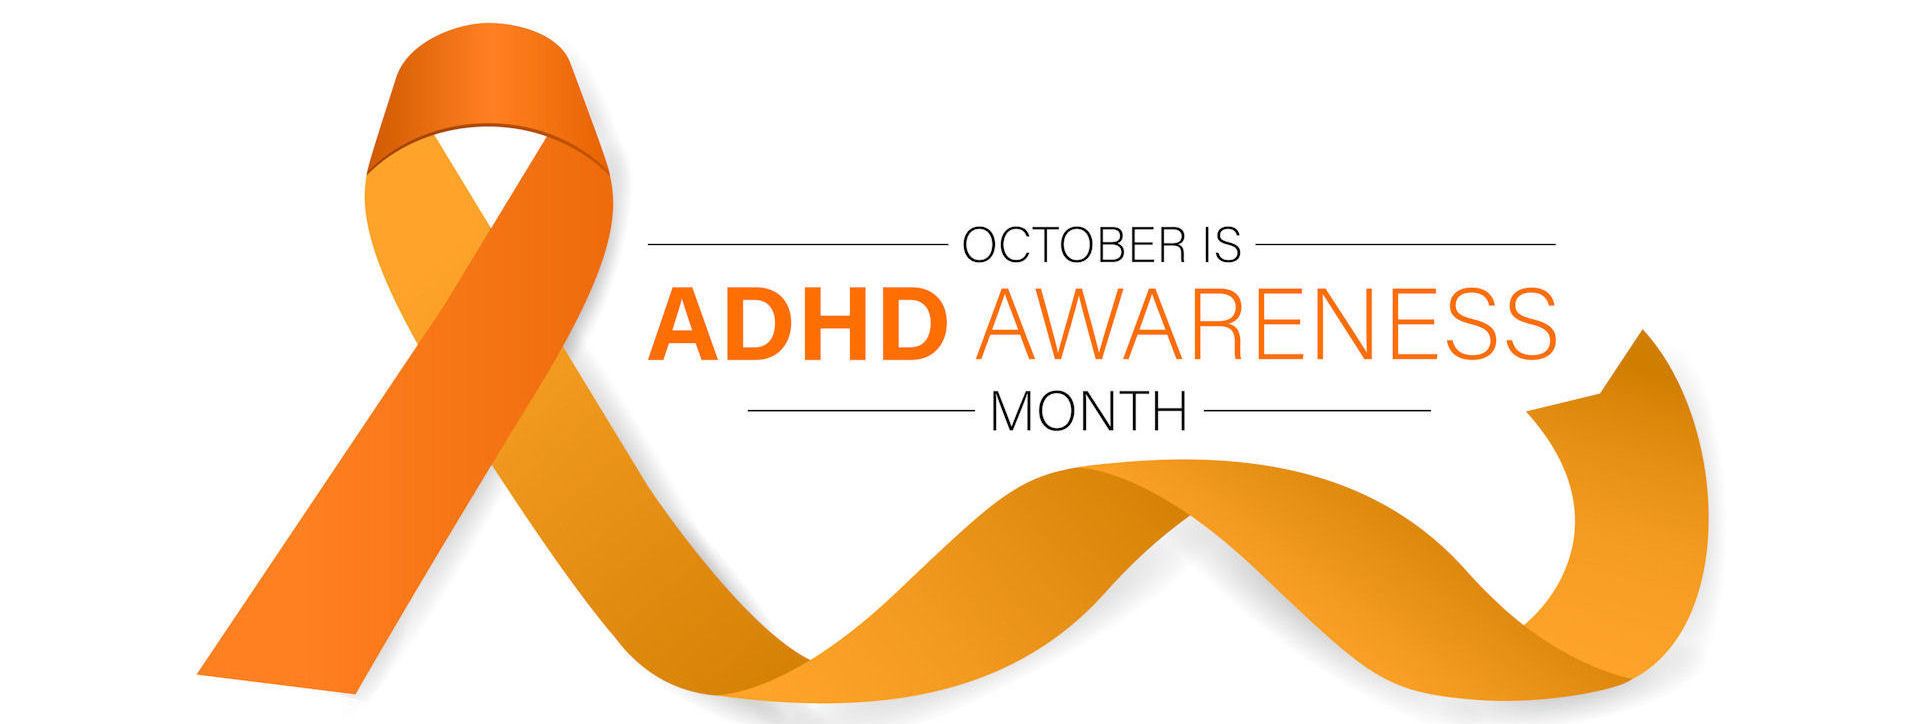 National ADHD Awareness Month (1)